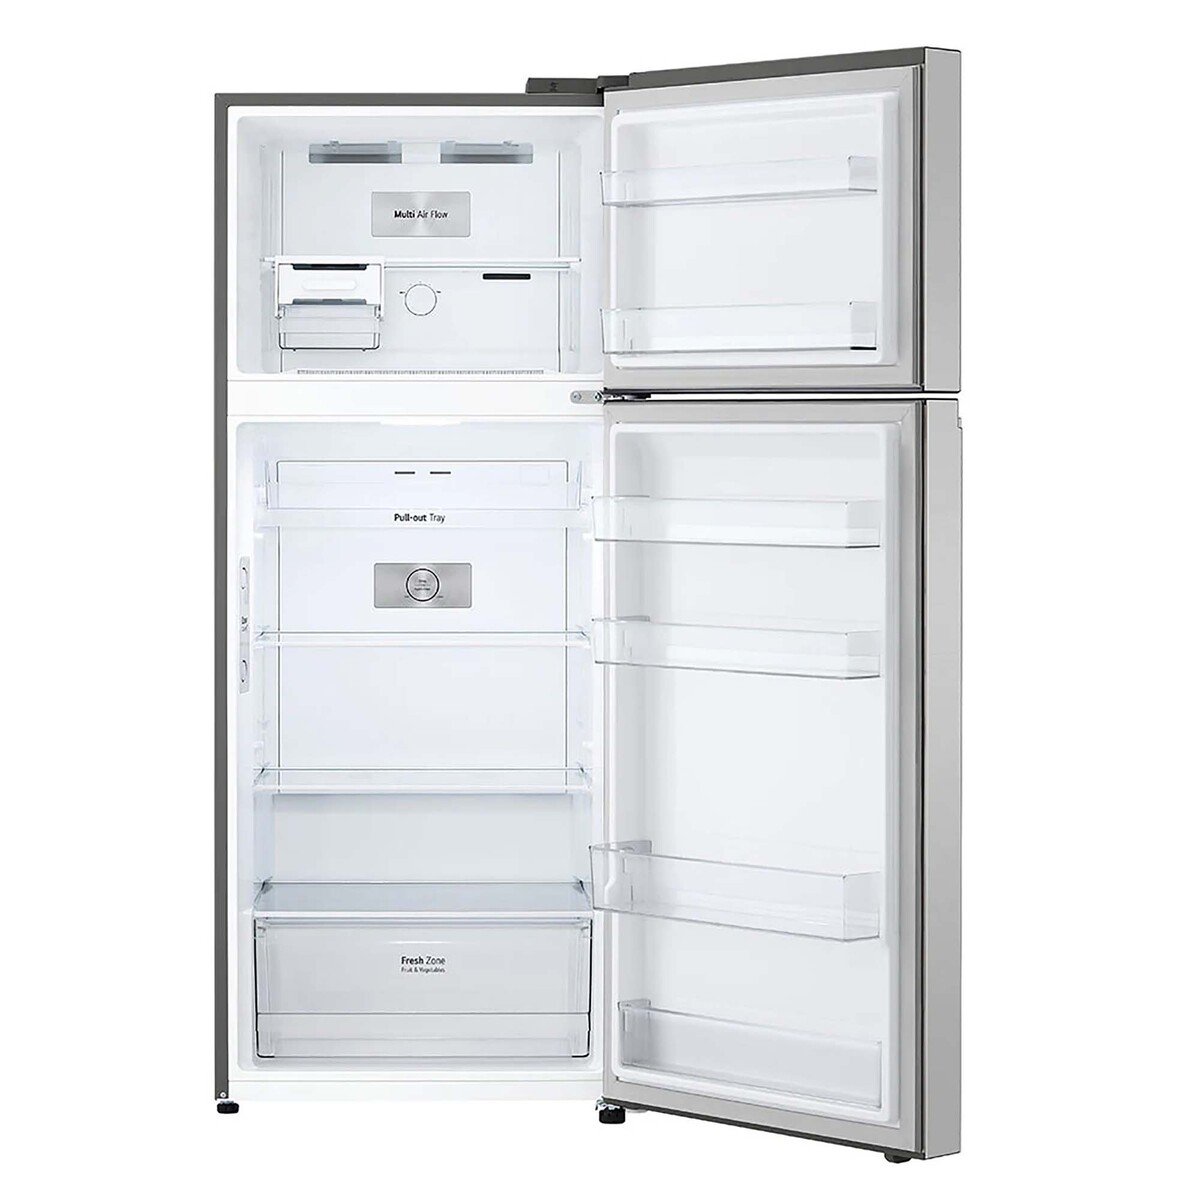 LG Double Door Refrigerator 375LTR, Door Cooling+, Multi Air Flow, Smart Diagnosis, Platinum Silver, GN-B482PLGB